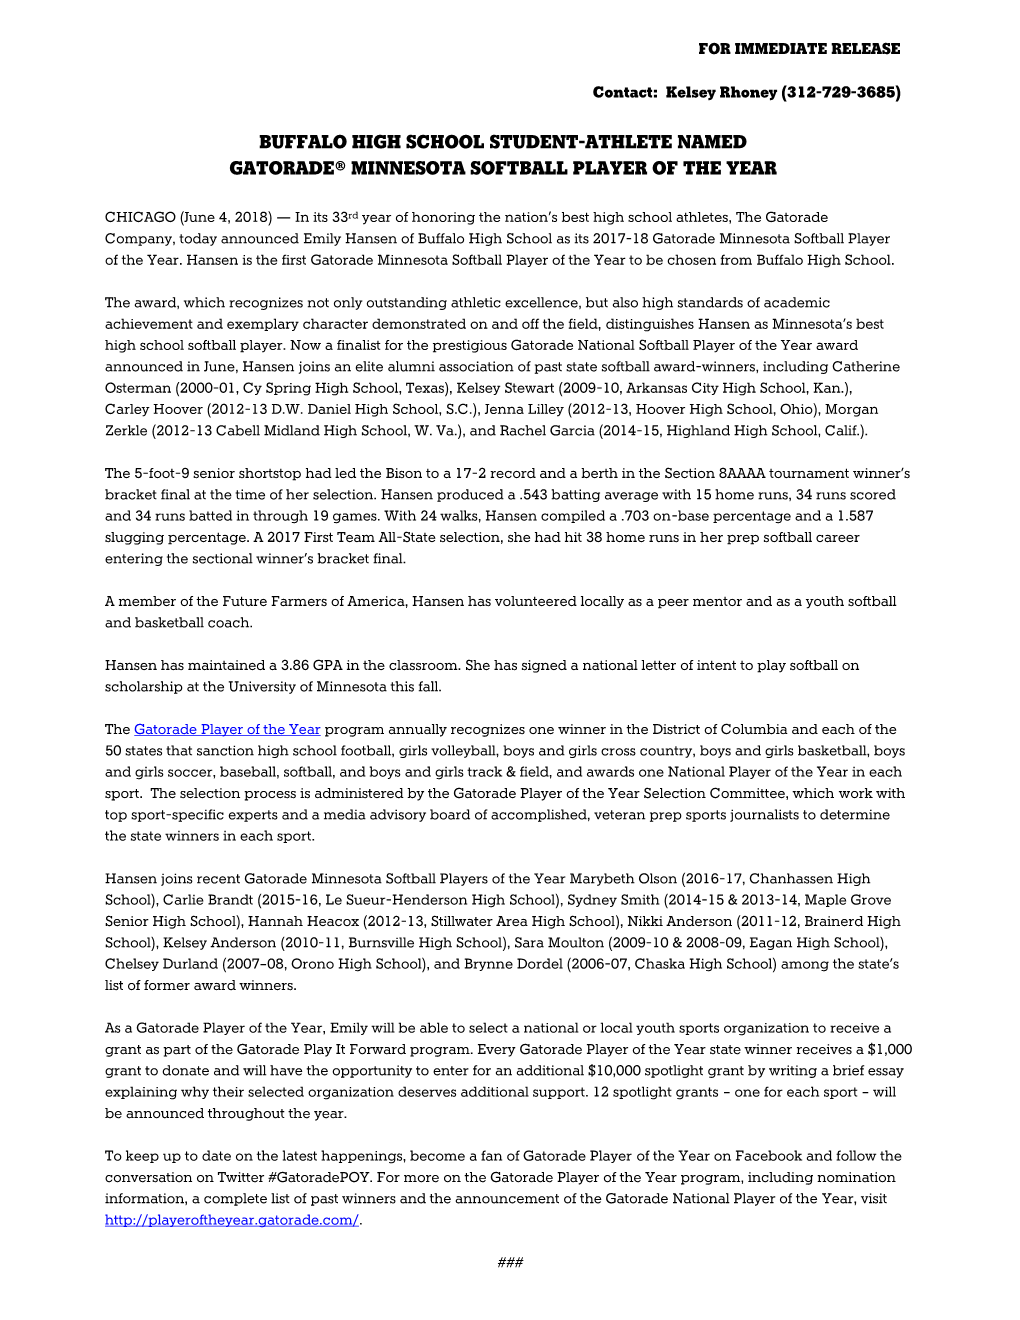 Buffalo High School Student-Athlete Named Gatorade® Minnesota Softball Player of the Year